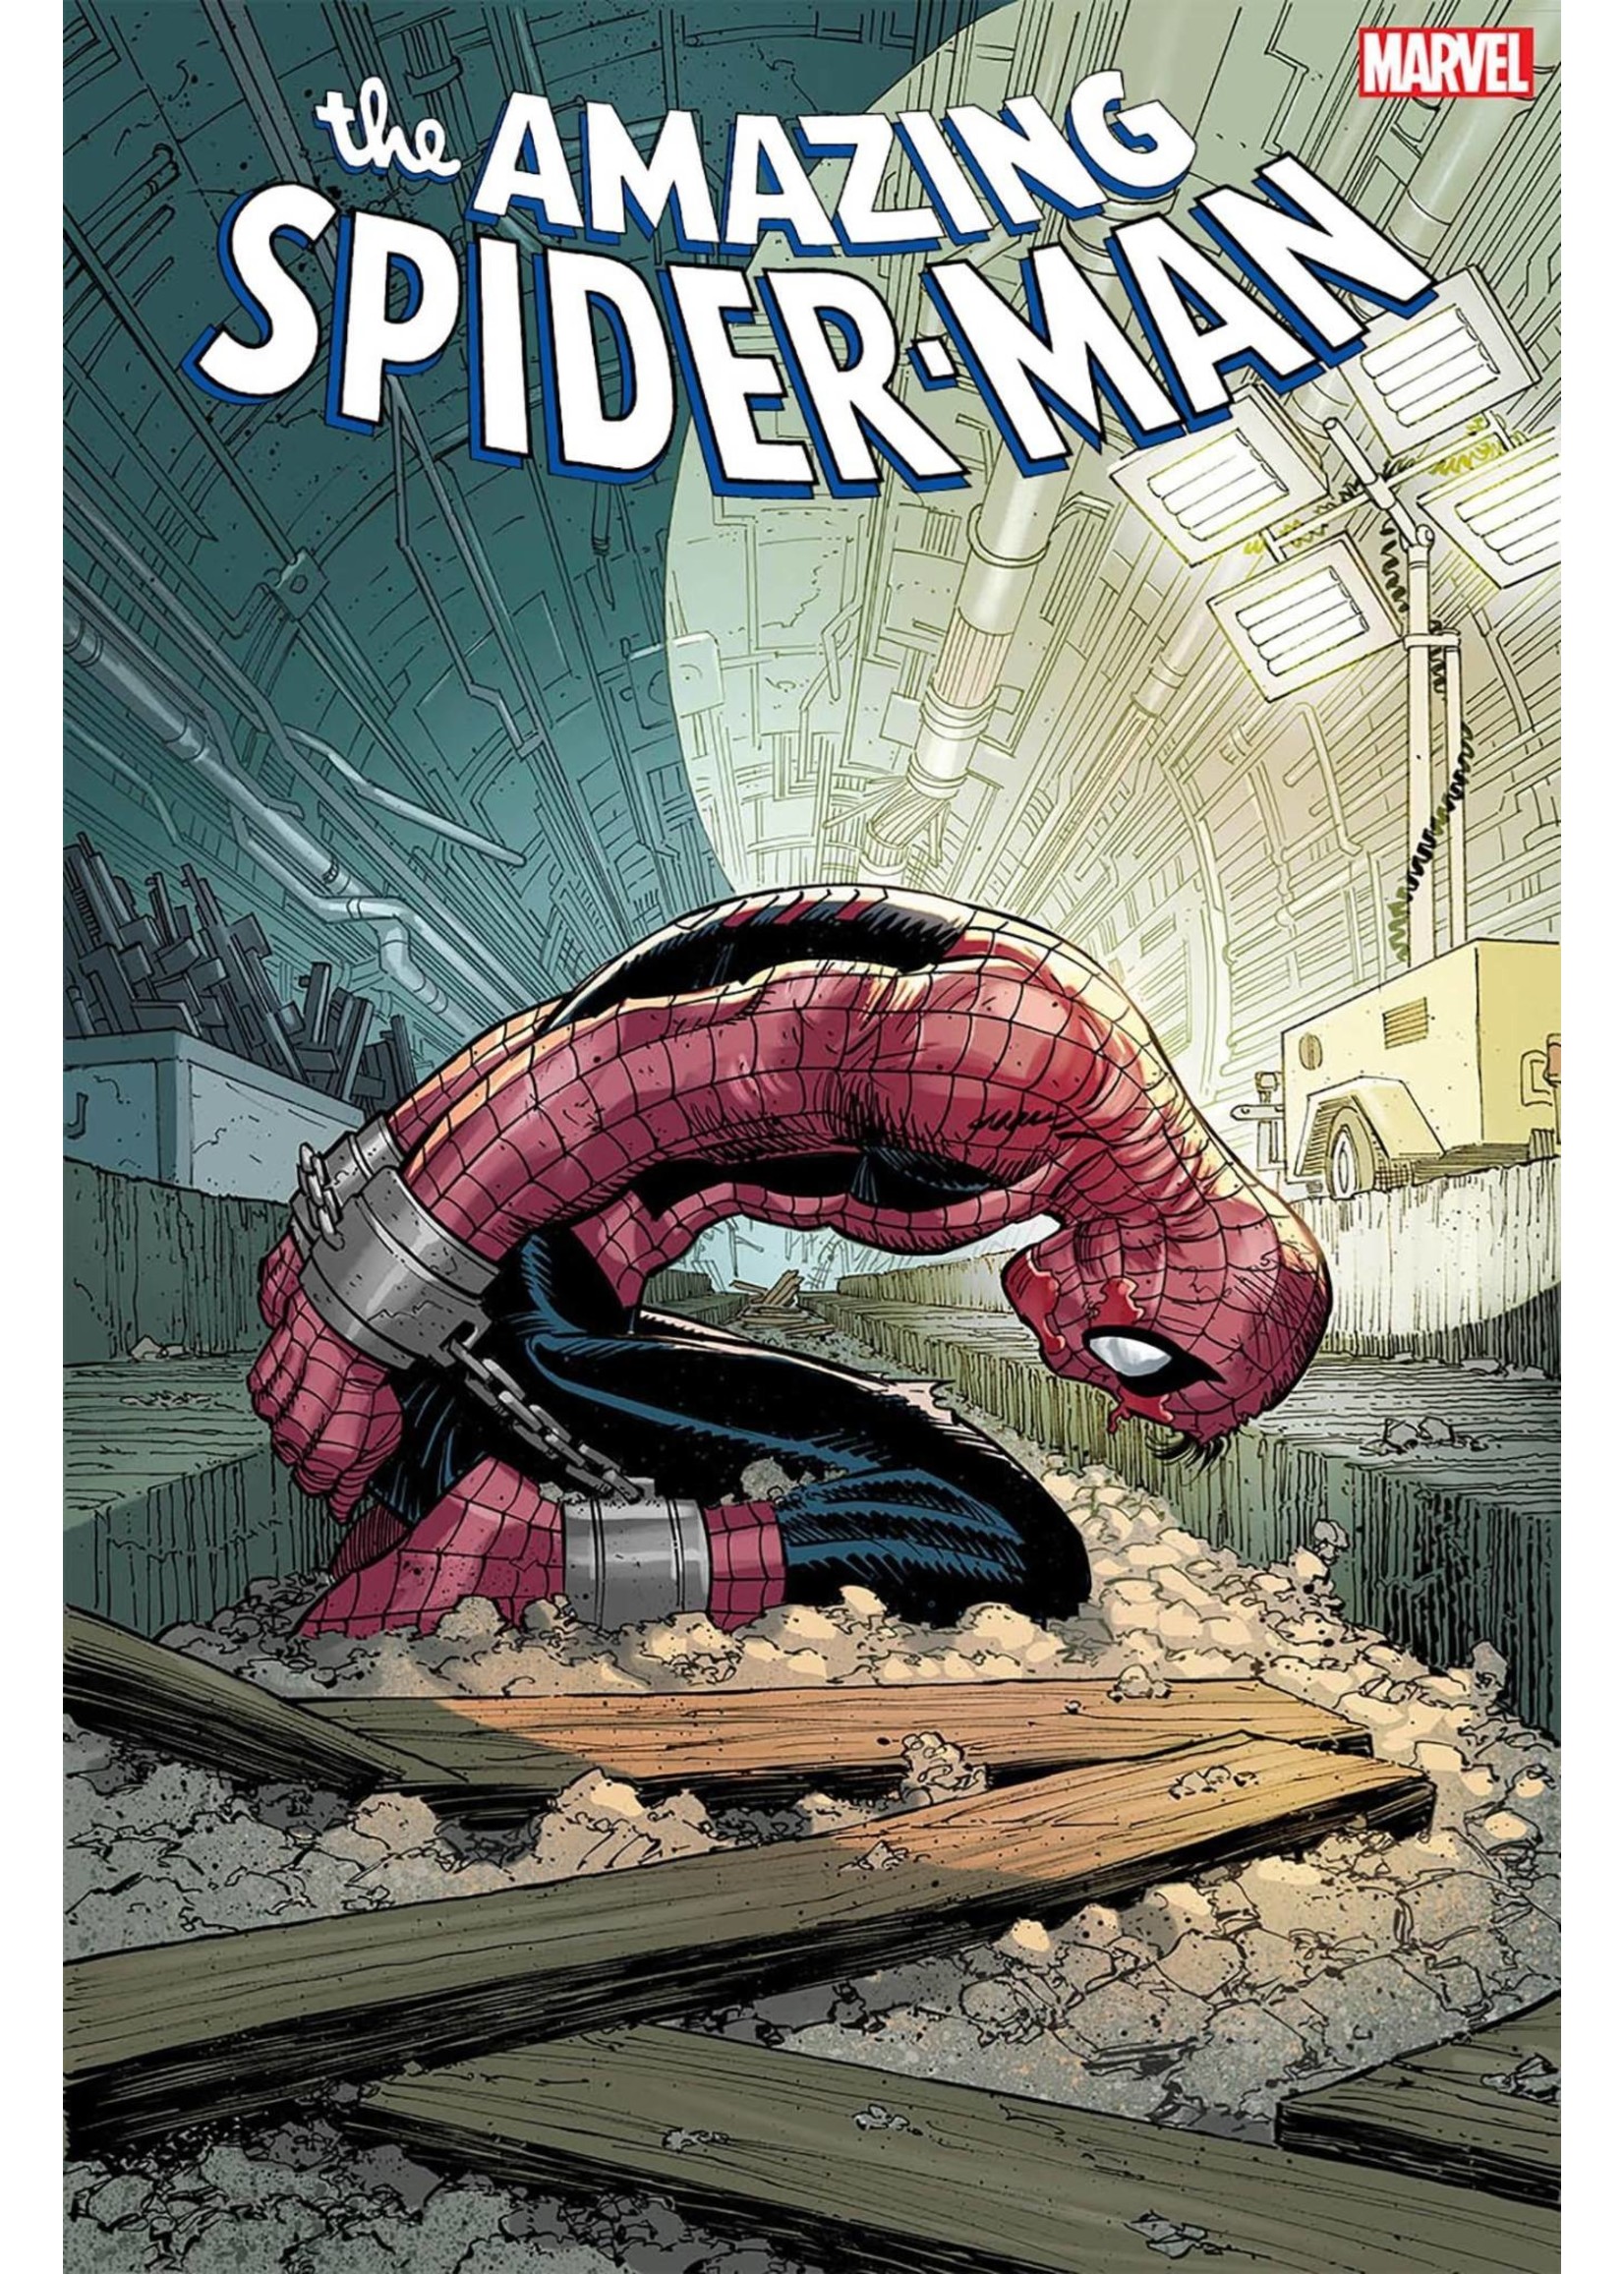 MARVEL COMICS AMAZING SPIDER-MAN #3 2ND PRINT